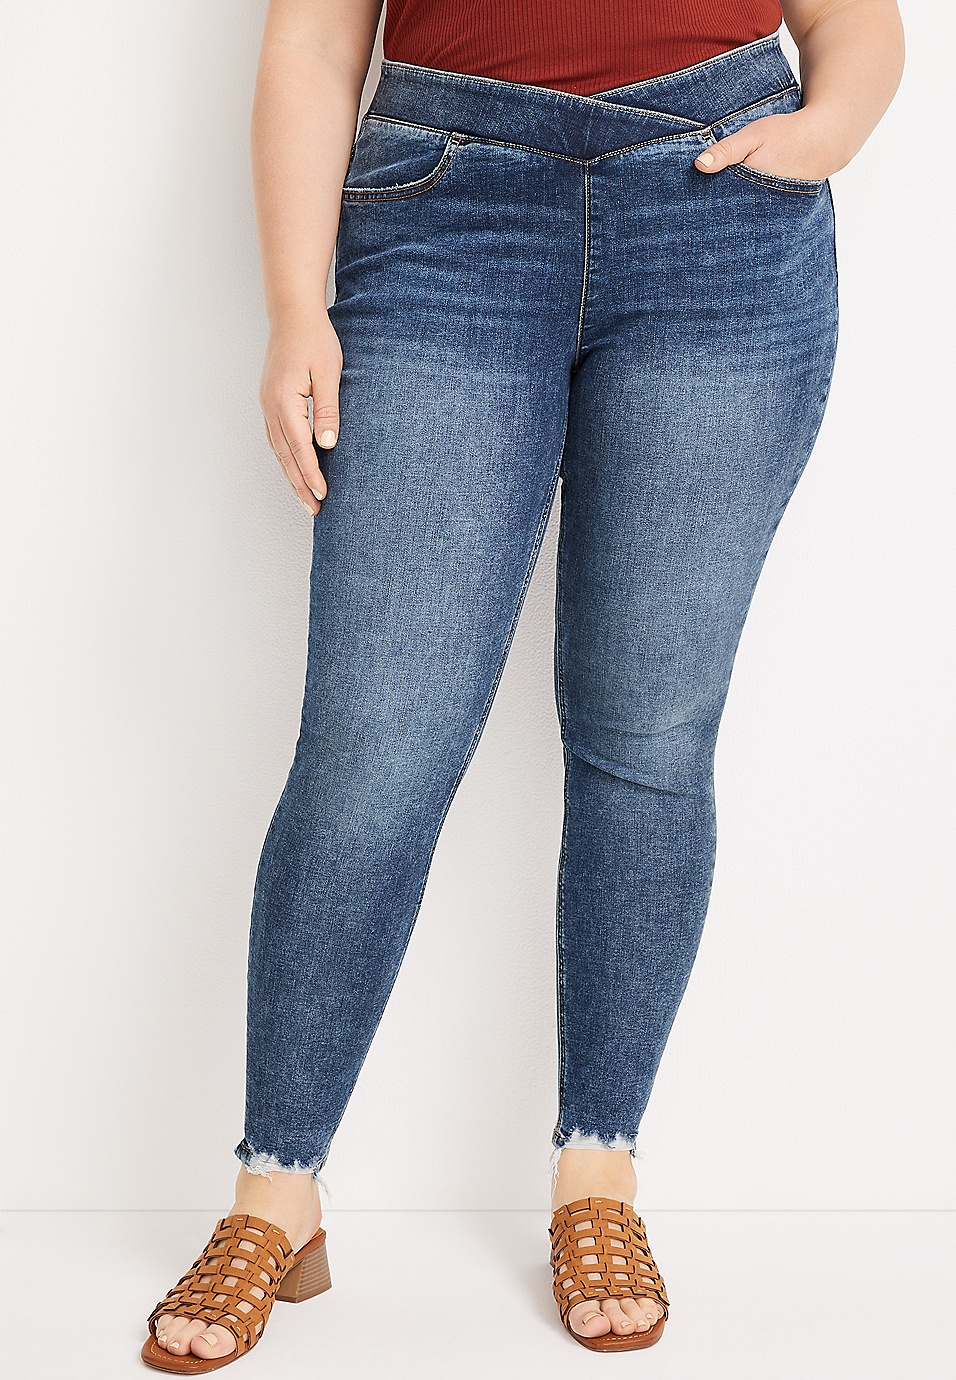 Stylish High Waist Jeans for Curvy Women